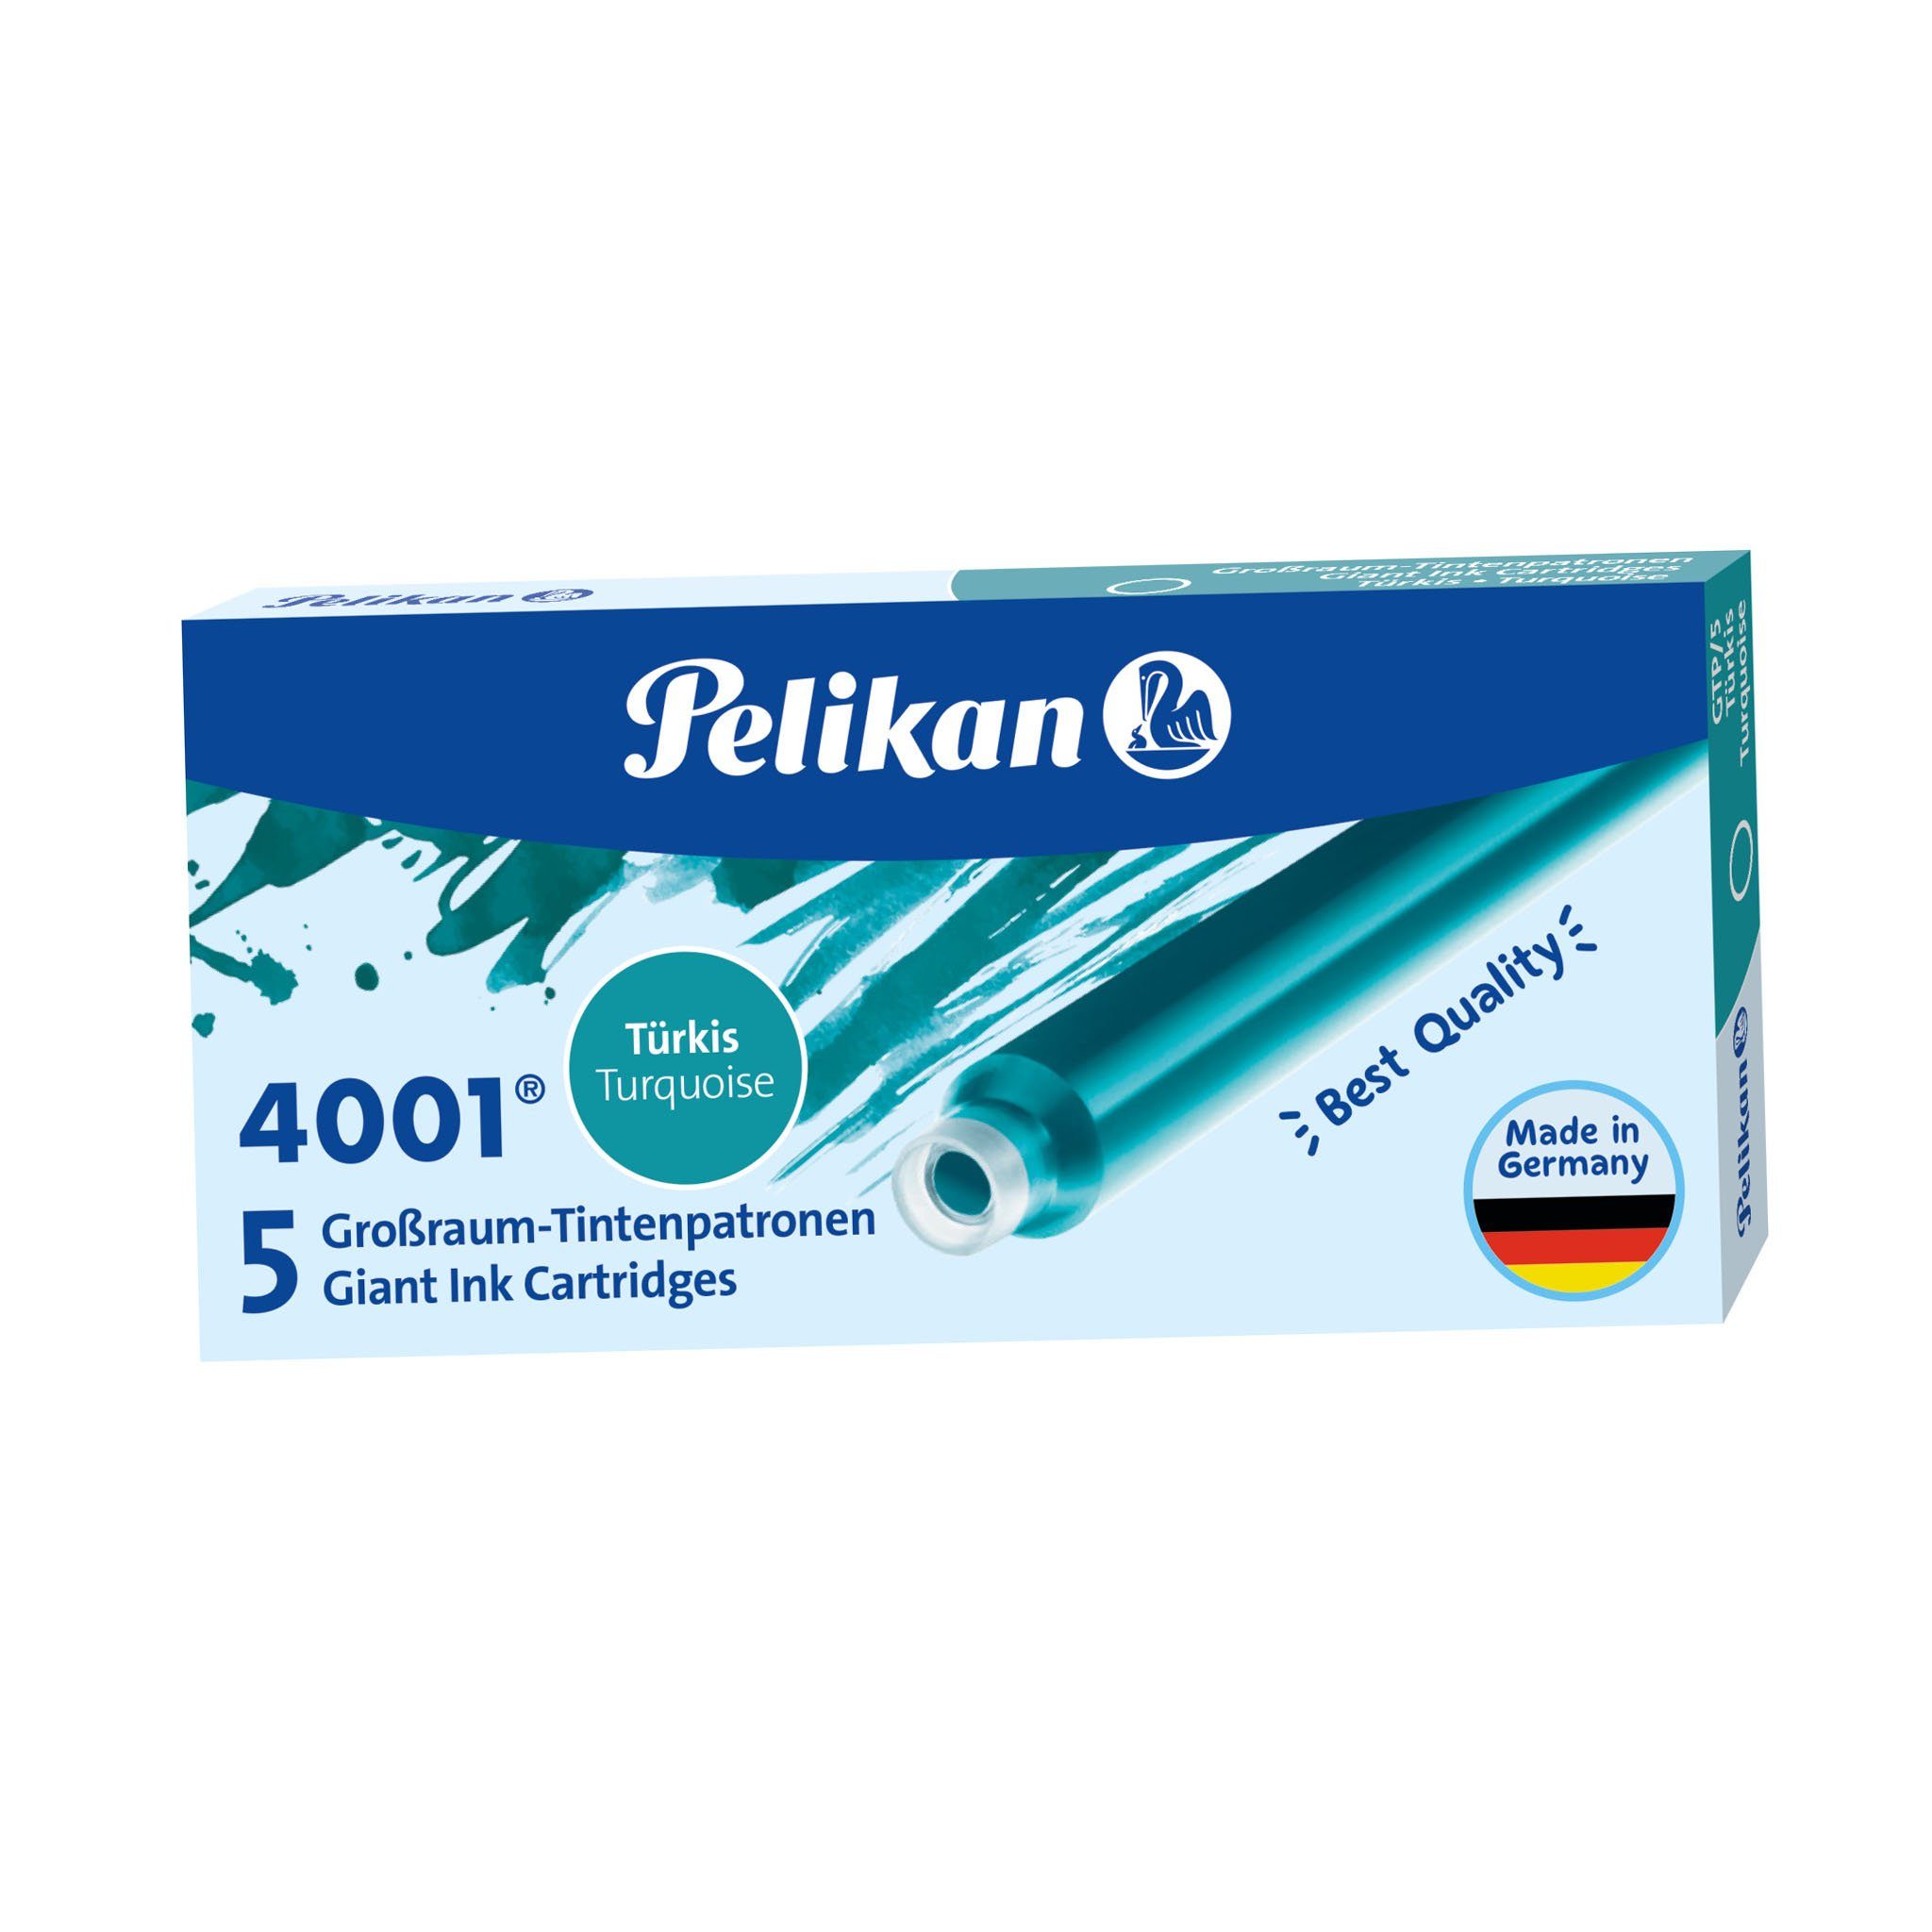 türkis Großraum-Tintenpatronen Pelikan 4001 Füllfederhalter GTP/5, Pelikan